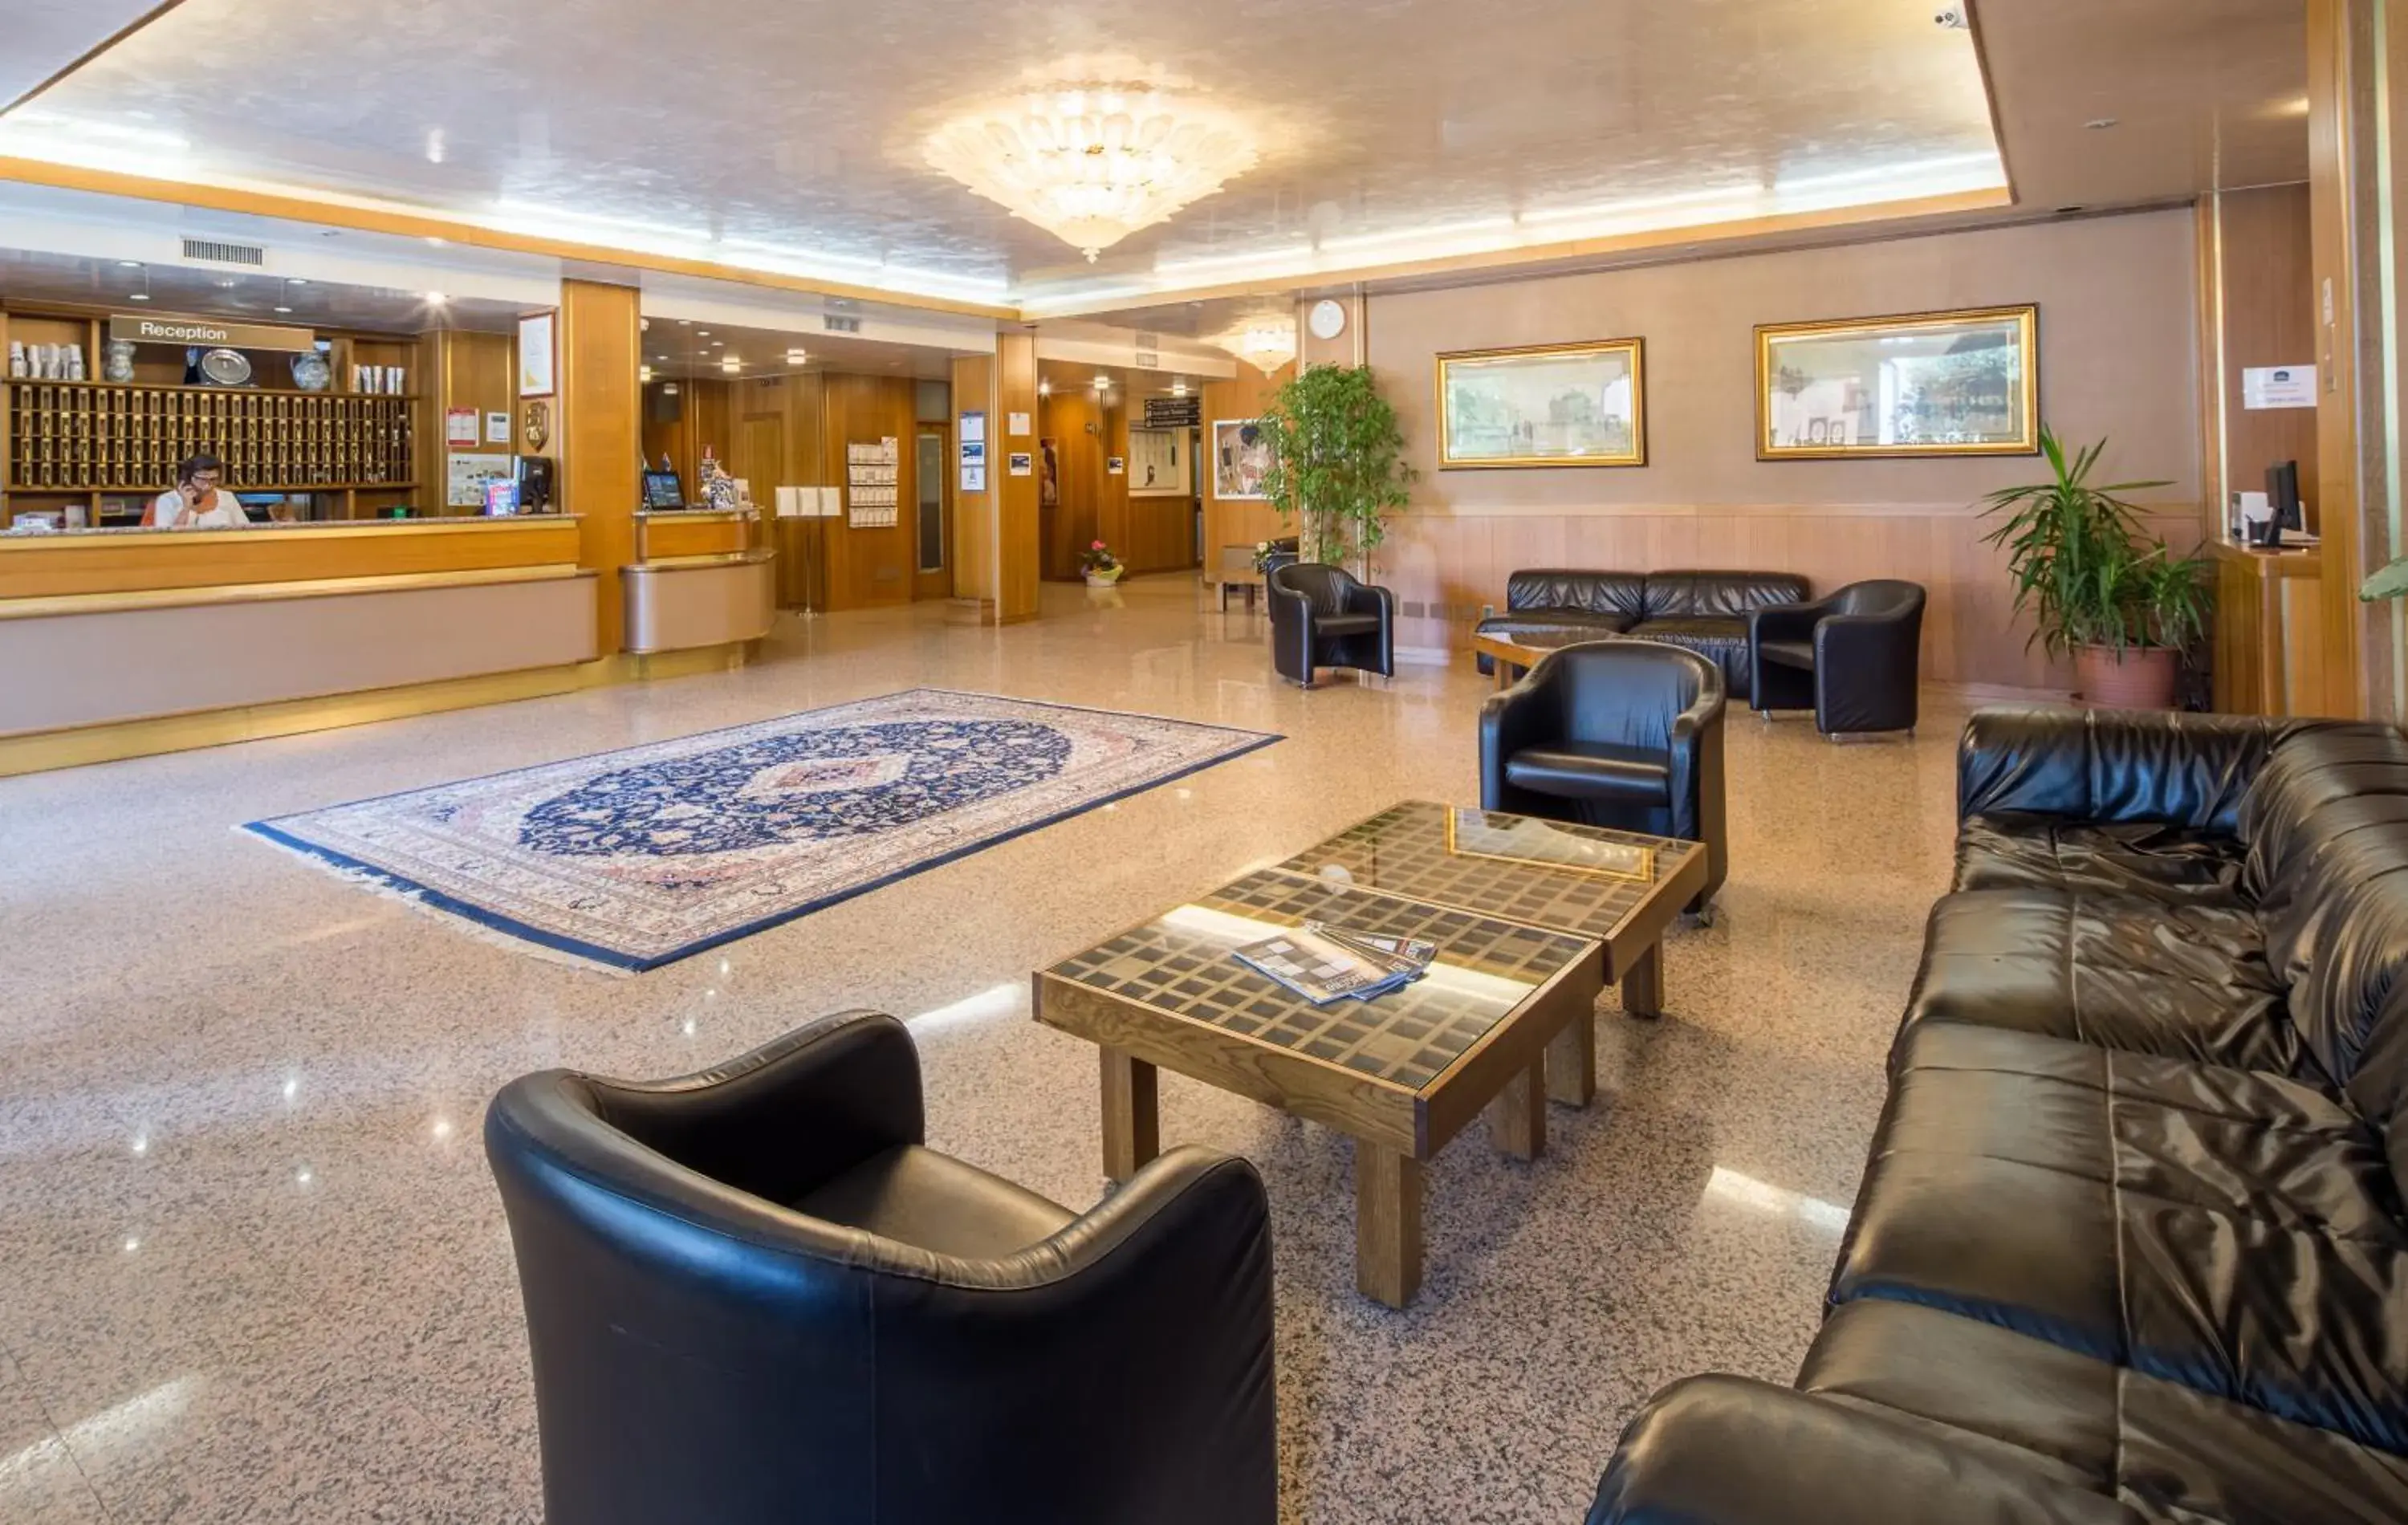 Communal lounge/ TV room, Lobby/Reception in Bonotto Hotel Palladio